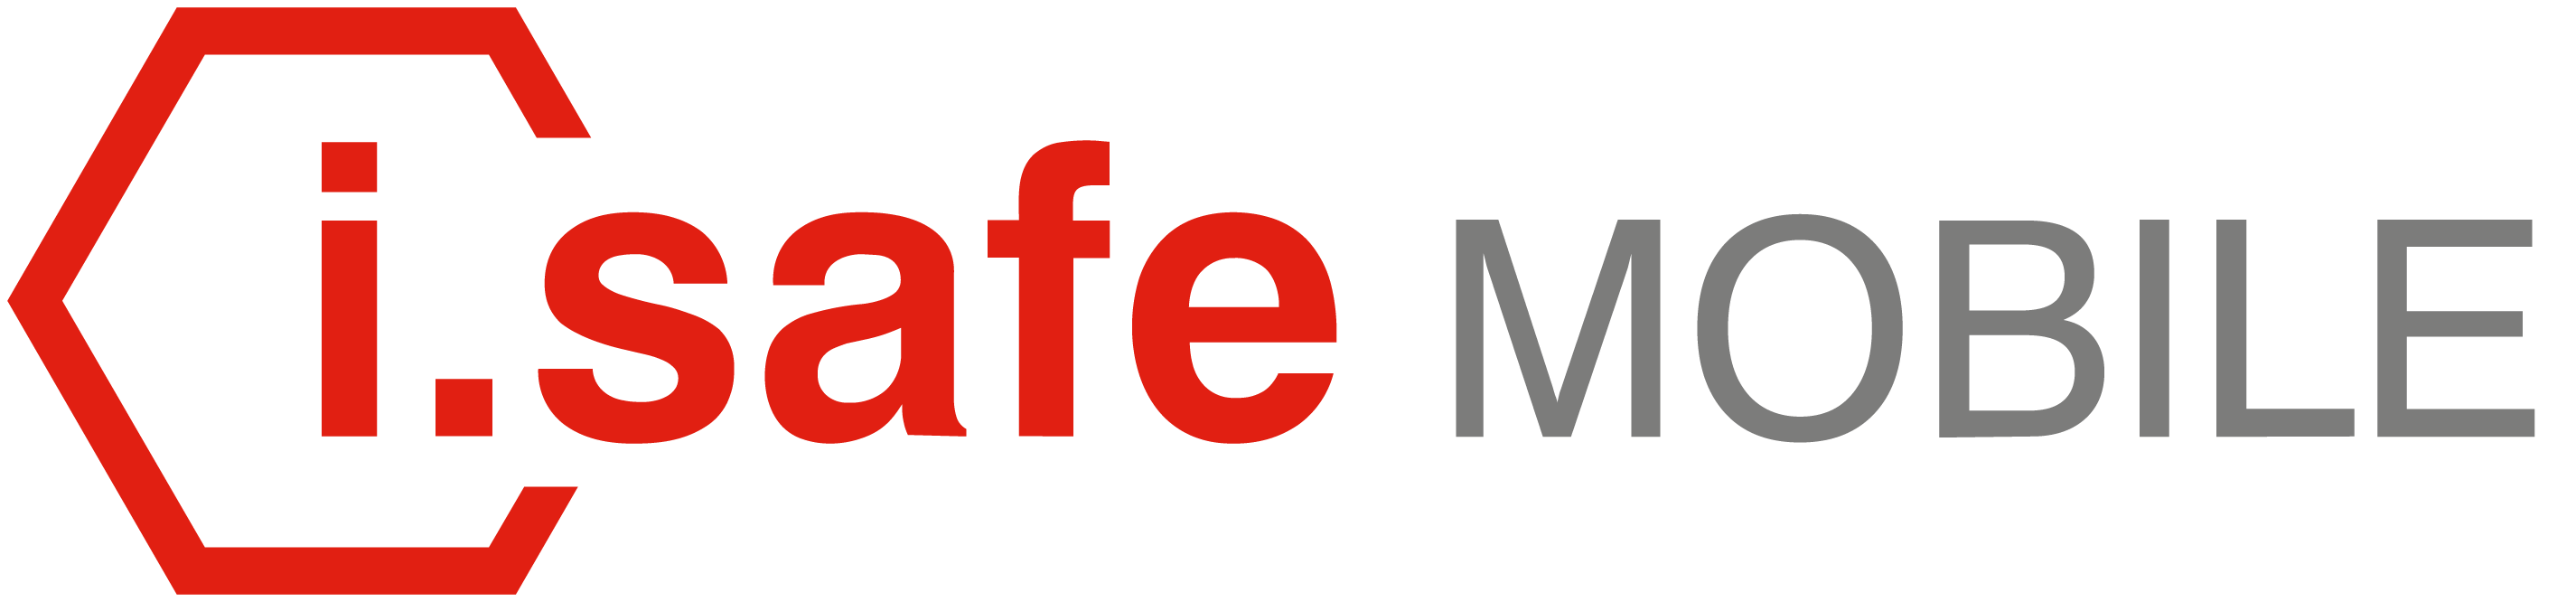 i safe MOBILE - logo